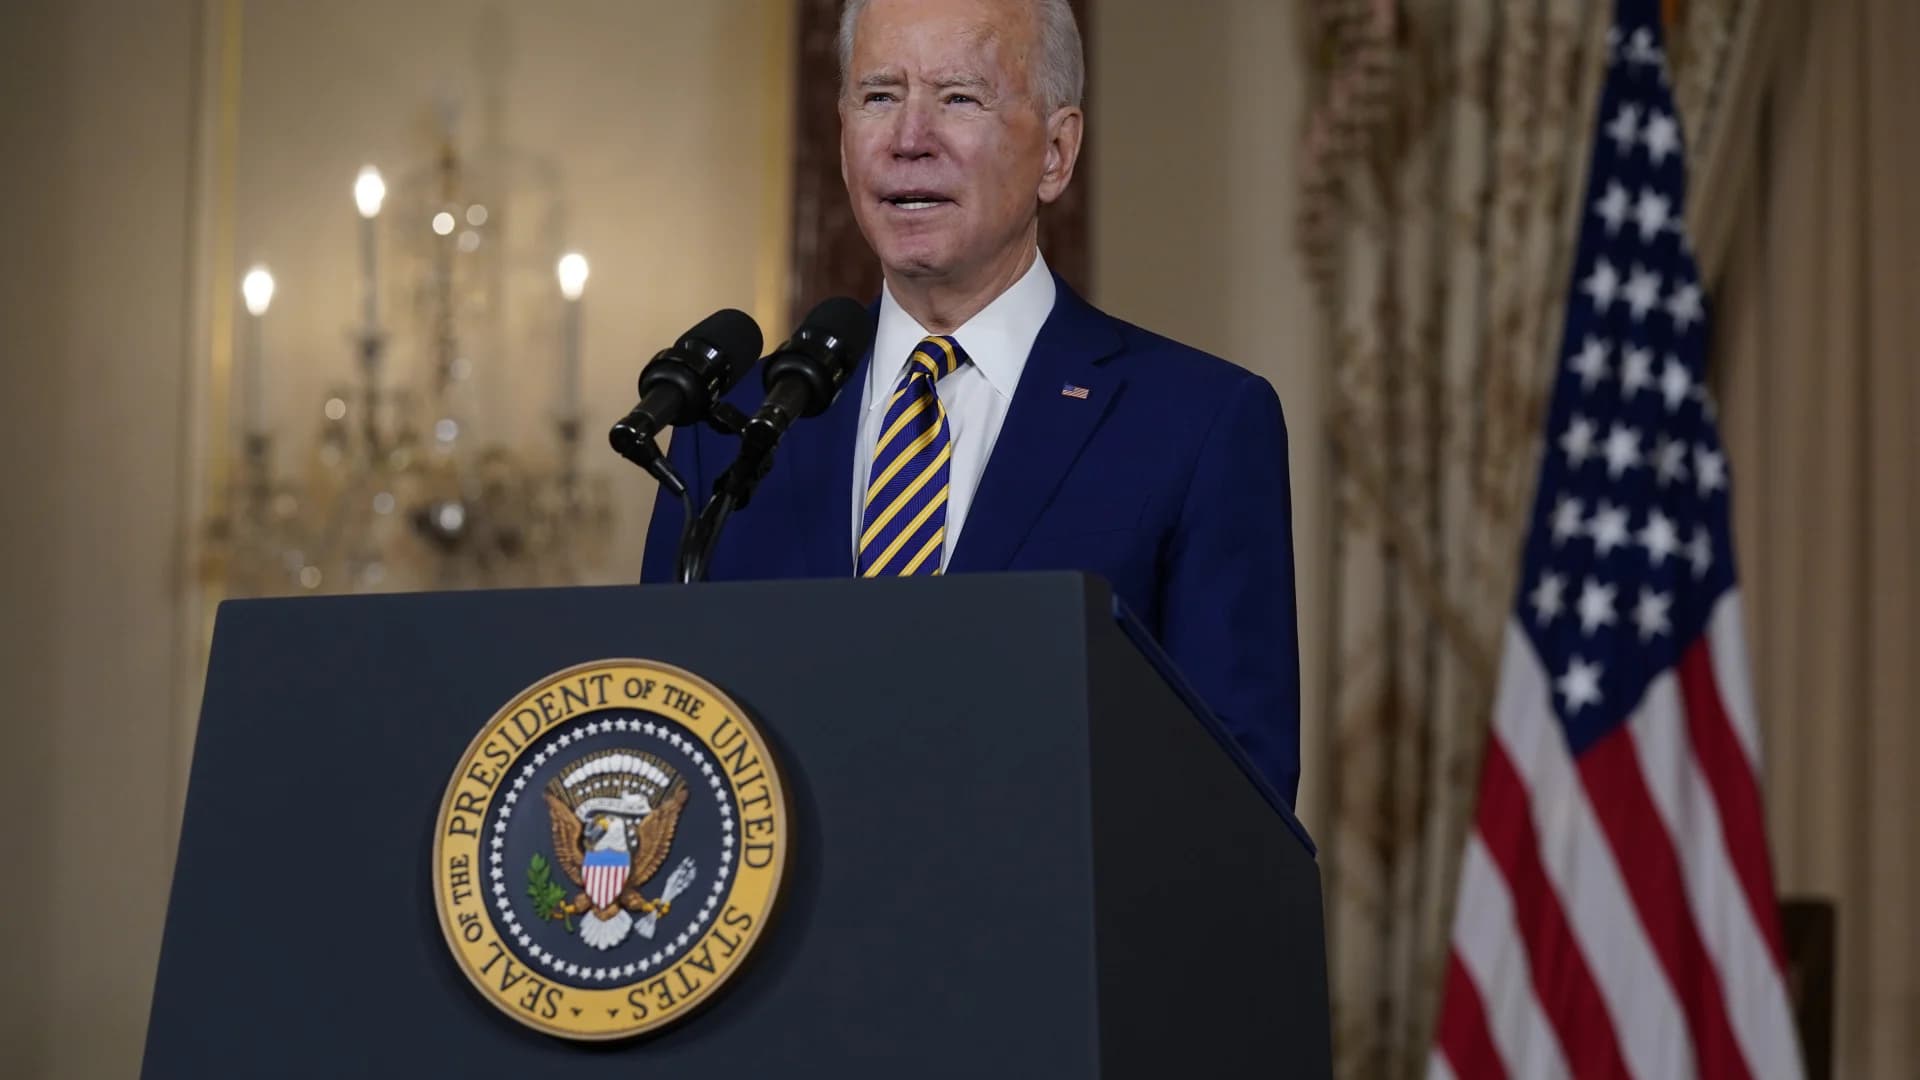 Biden strikes tough tone on Russia in diplomatic push